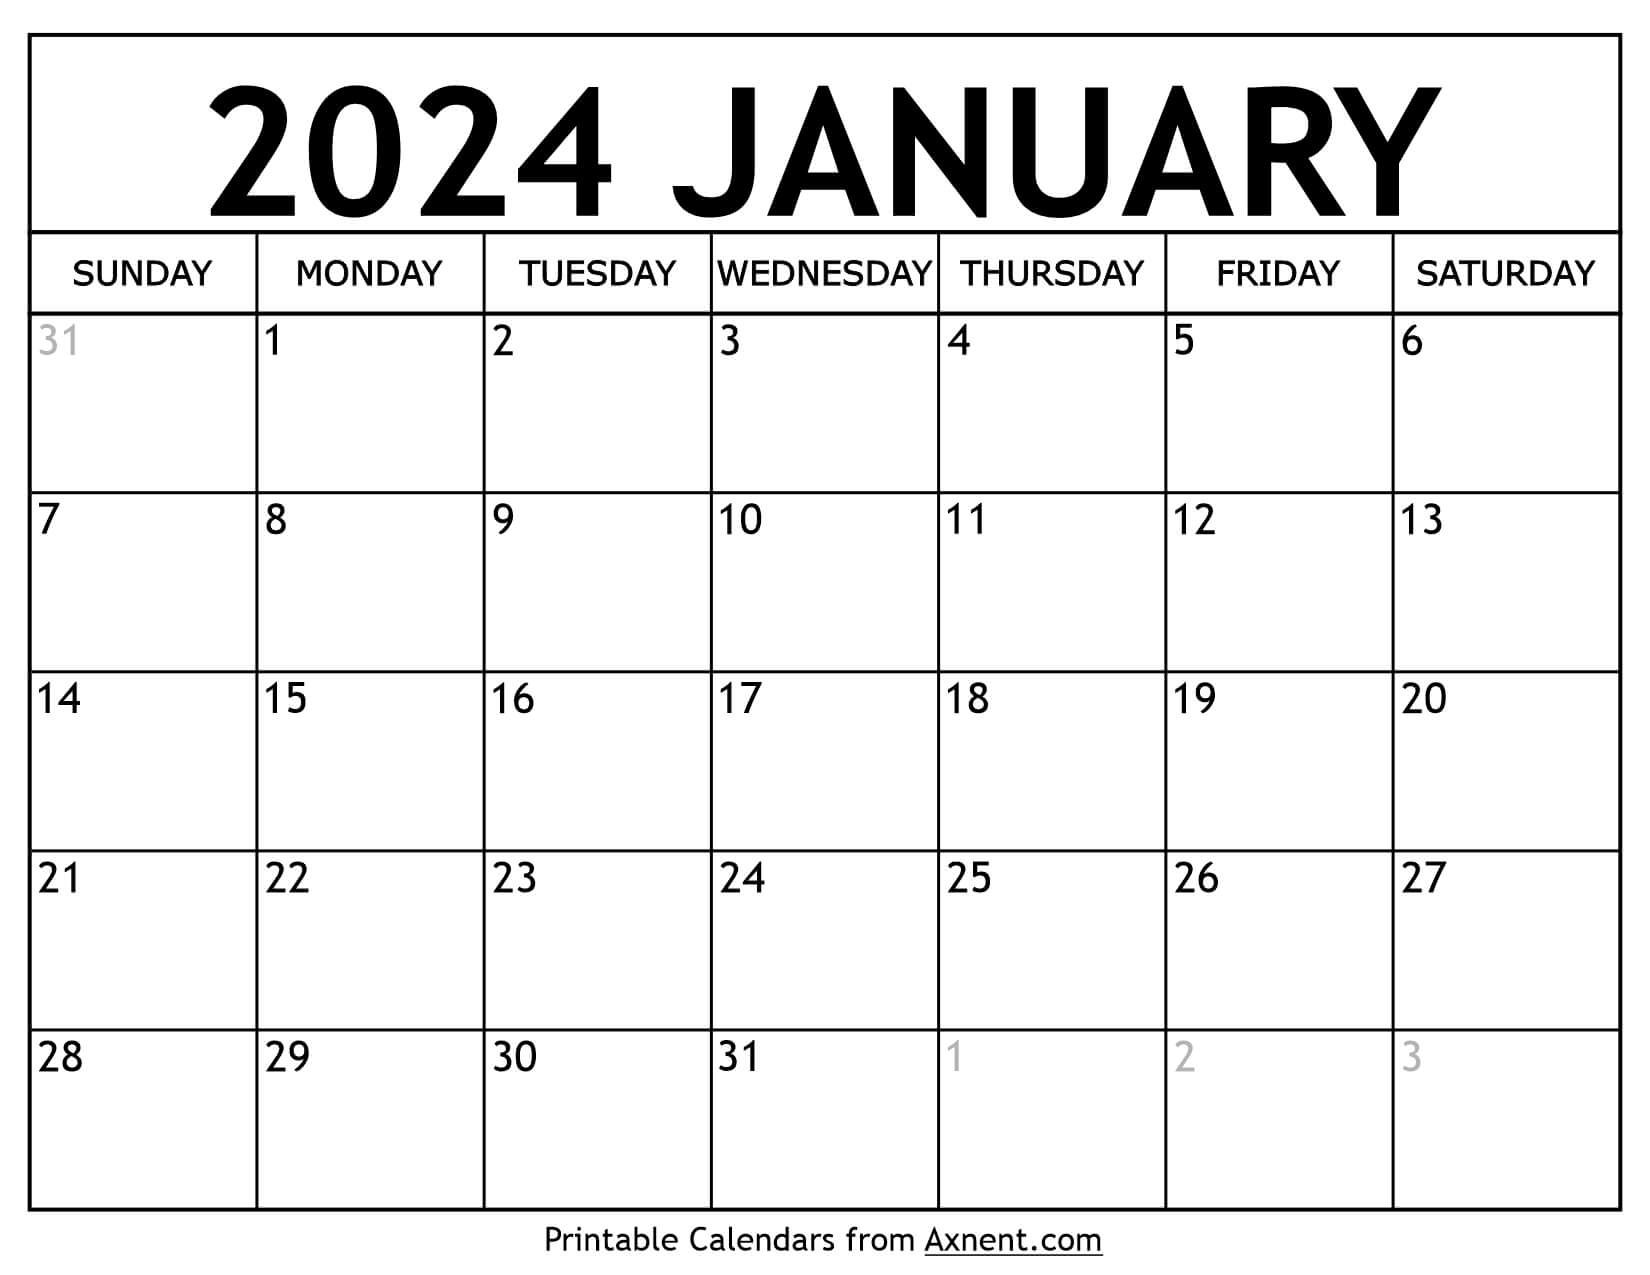 Printable January 2024 Calendar Template - Print Now for January Calendar 2024 Printable Free